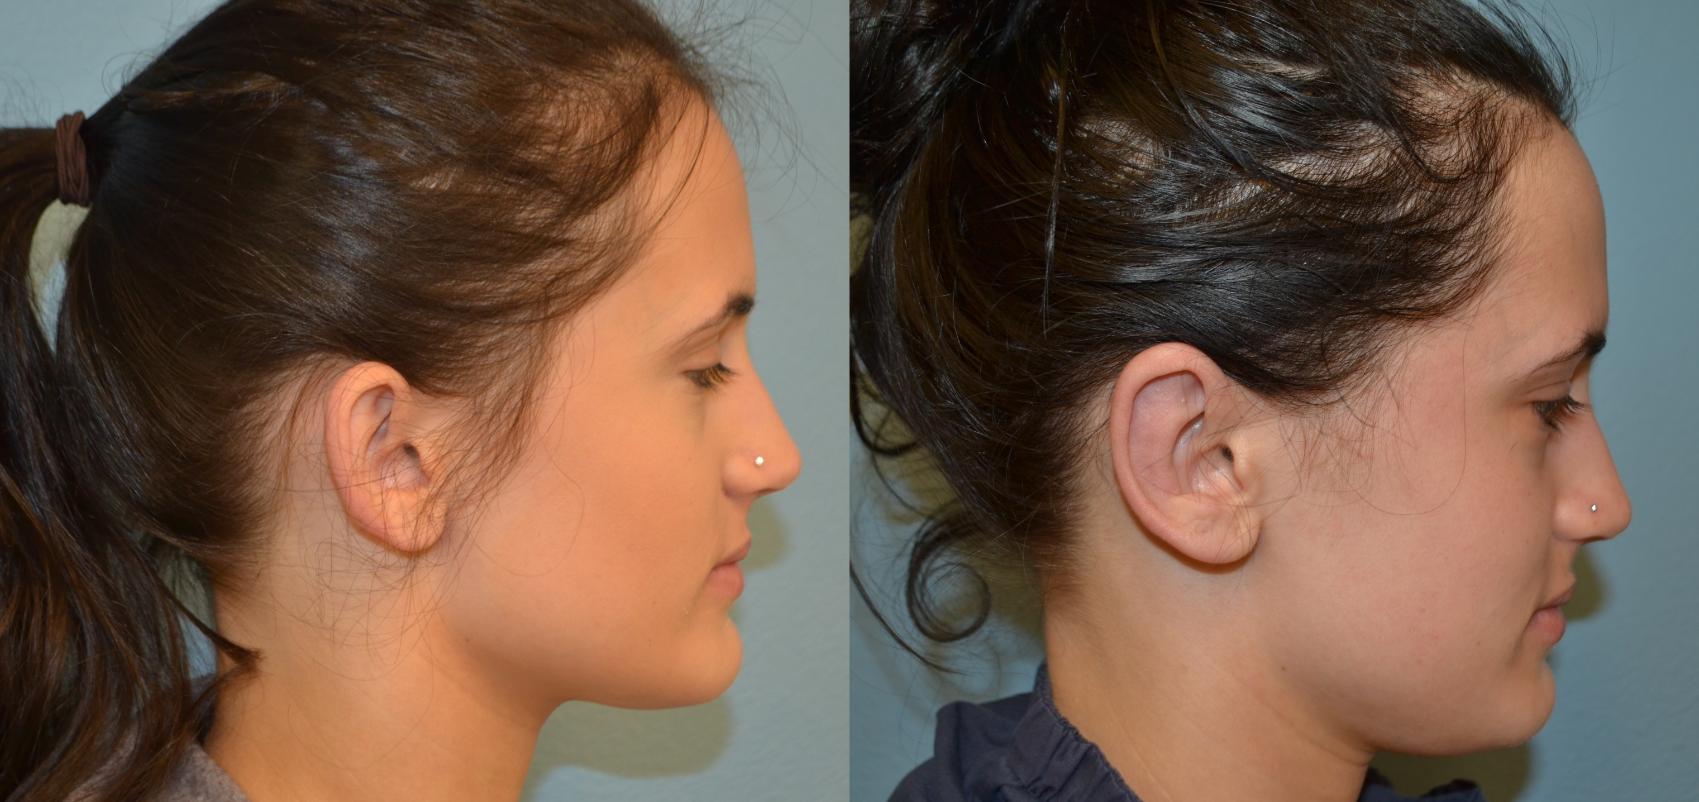 Ear Surgery Before & After Photo San Francisco, CA Kaiser Permanente Co...